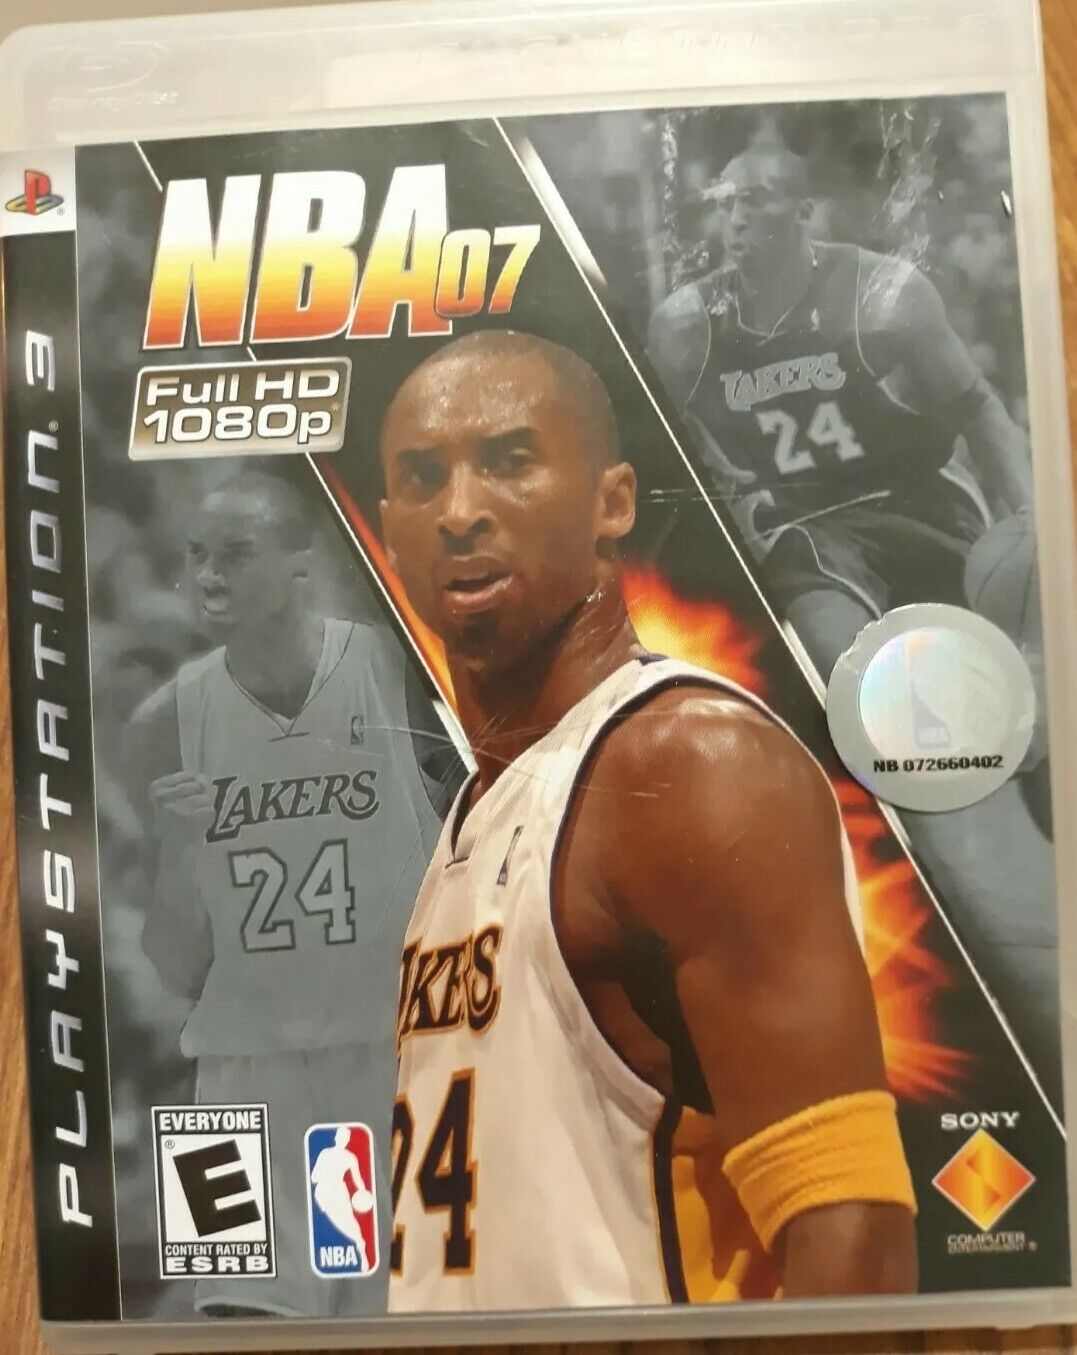 Mondwater Omtrek contact PlayStation 3 PS3 NBA07 Kobe Bryant Cover Full HD 1080p Video Game | eBay